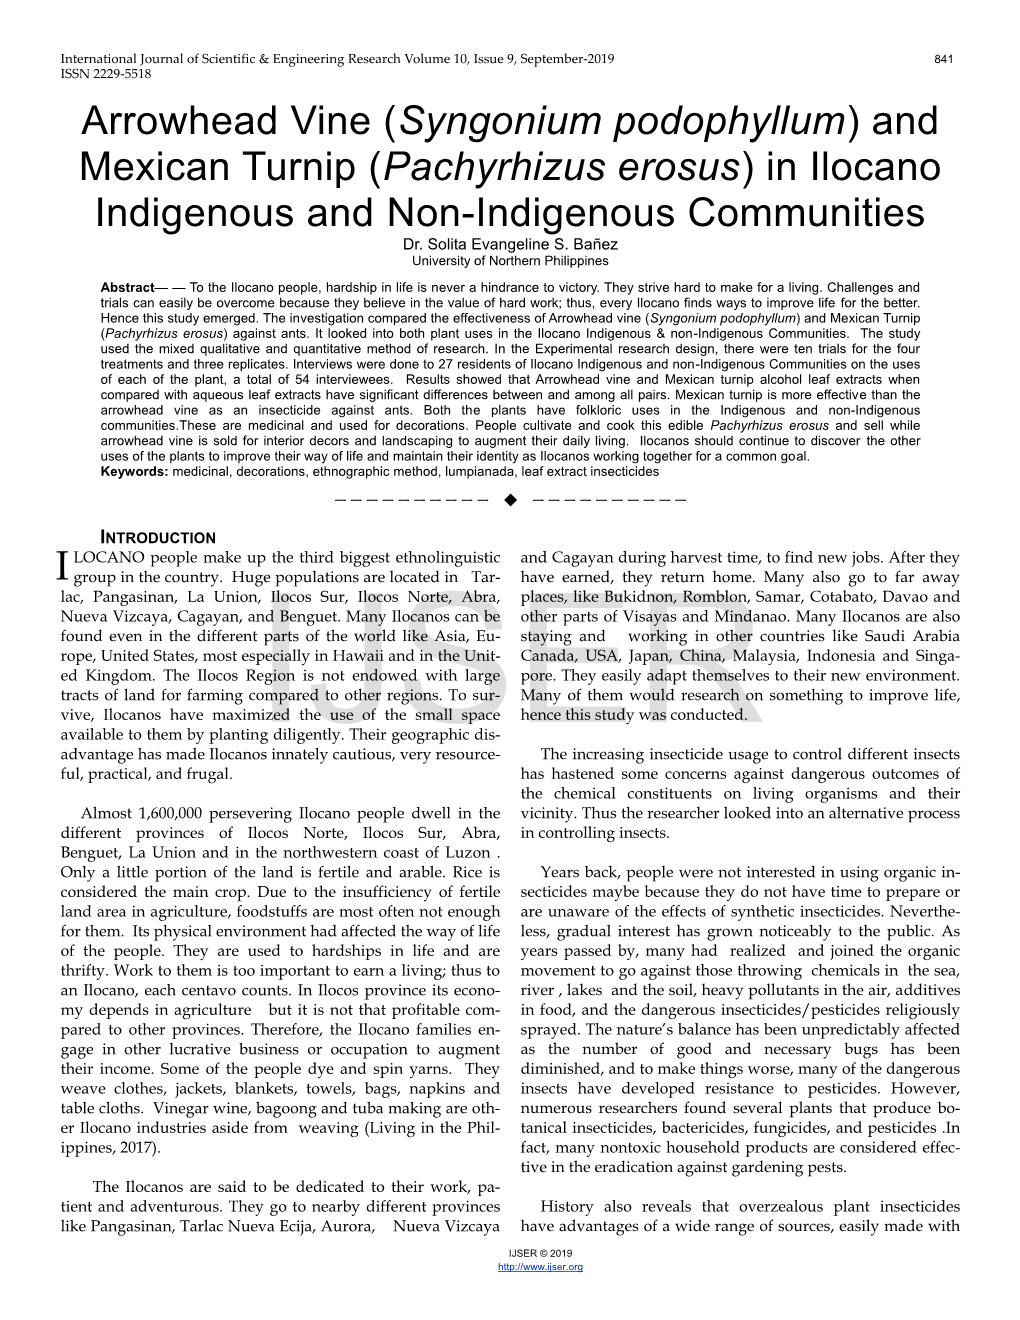 Arrowhead Vine (Syngonium Podophyllum) and Mexican Turnip (Pachyrhizus Erosus) in Ilocano Indigenous and Non-Indigenous Communities Dr